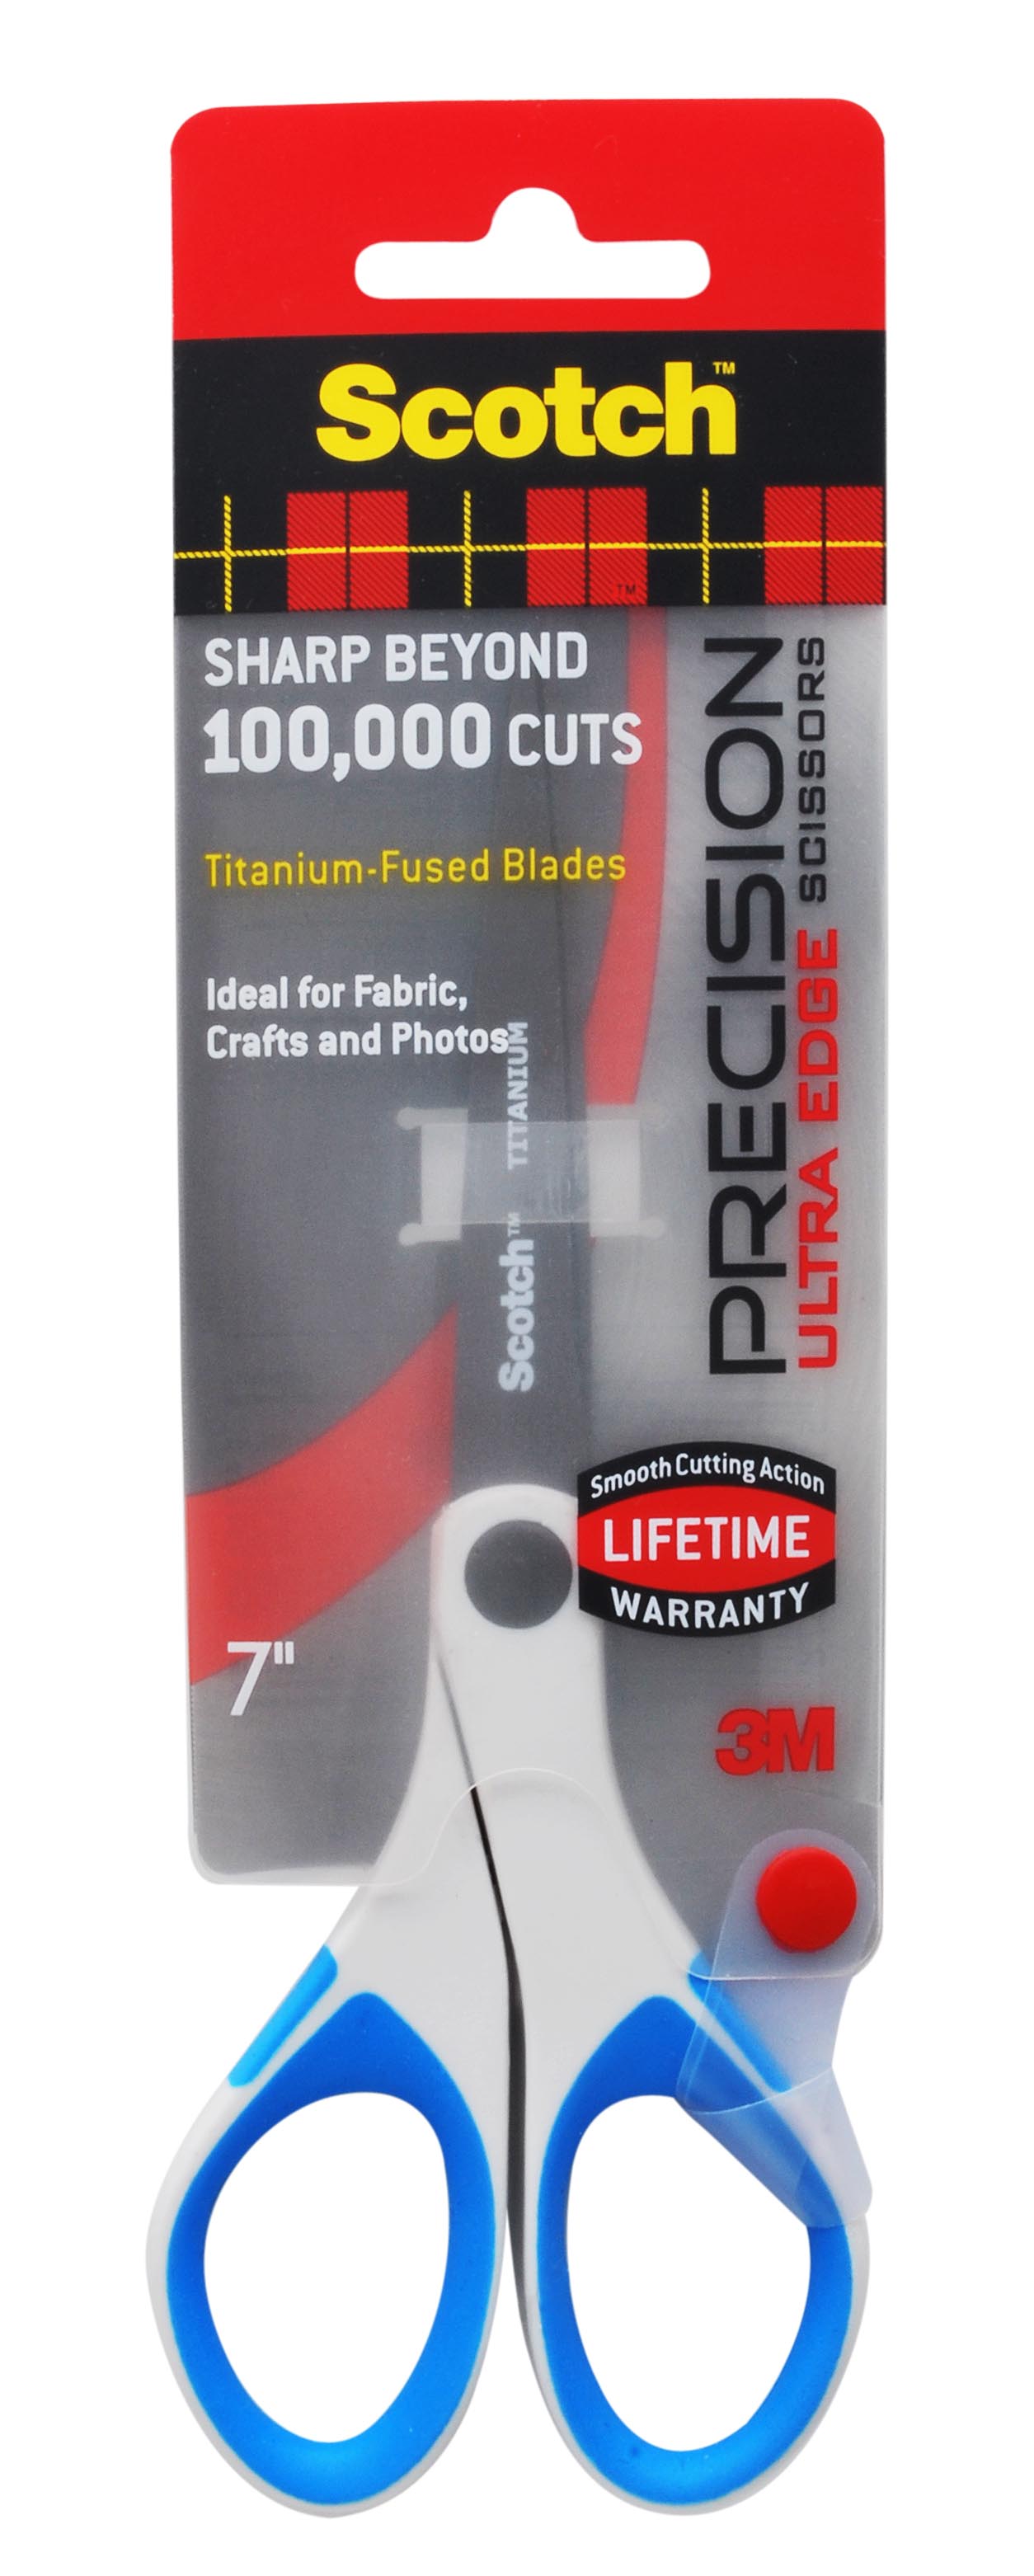 Scotch Scissors 3M 8 inch Precision Ultra Edge Titanium Blades